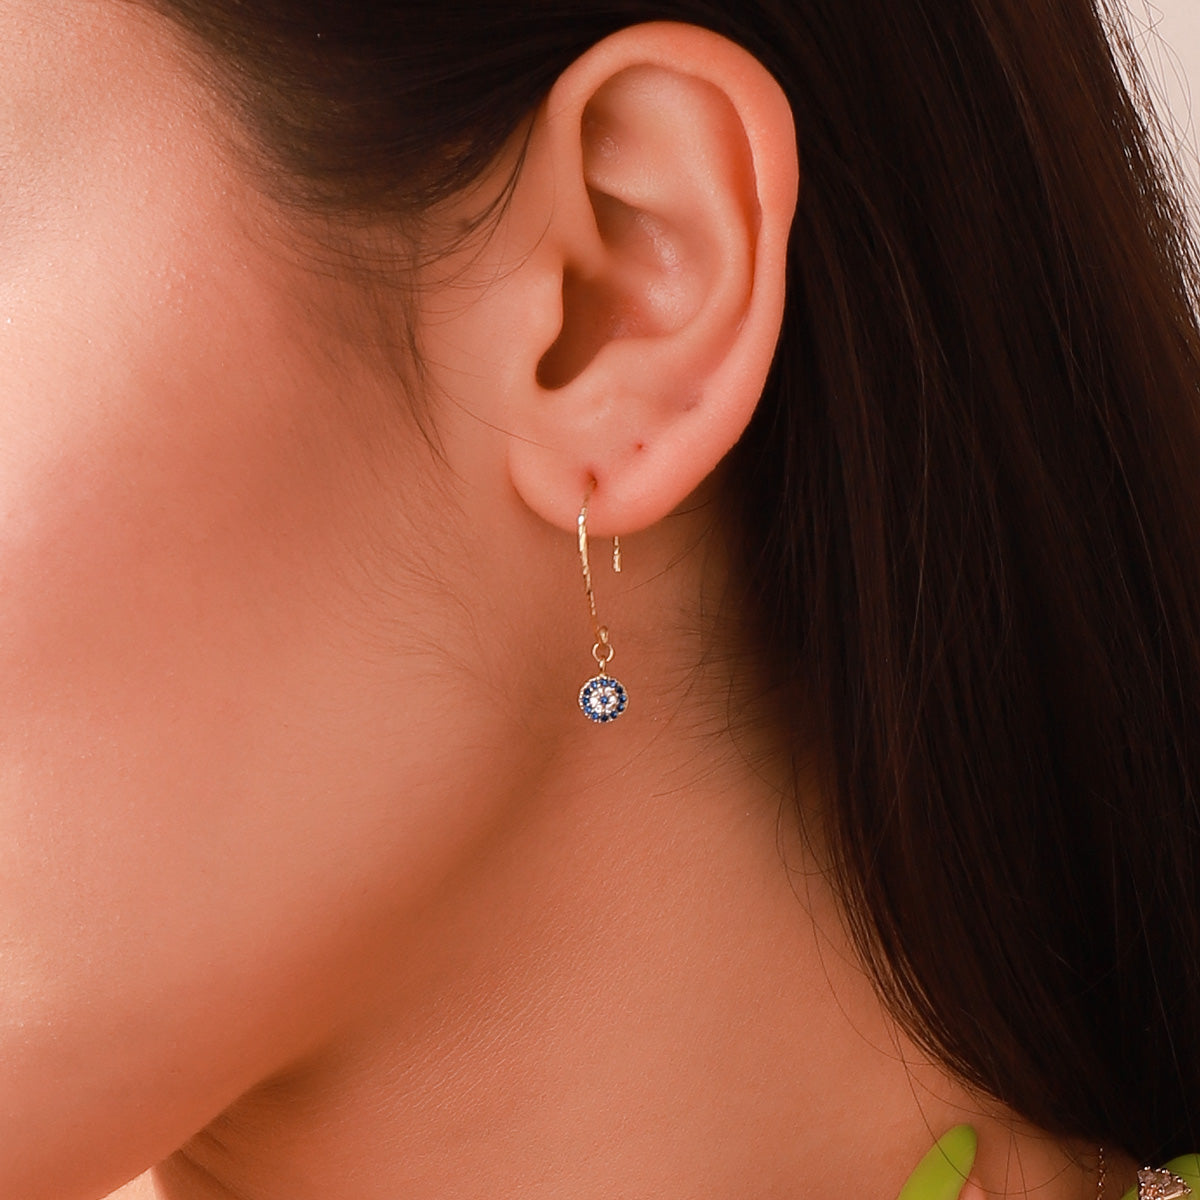 Selenichast sapphire diamond round drop large hoops earrings